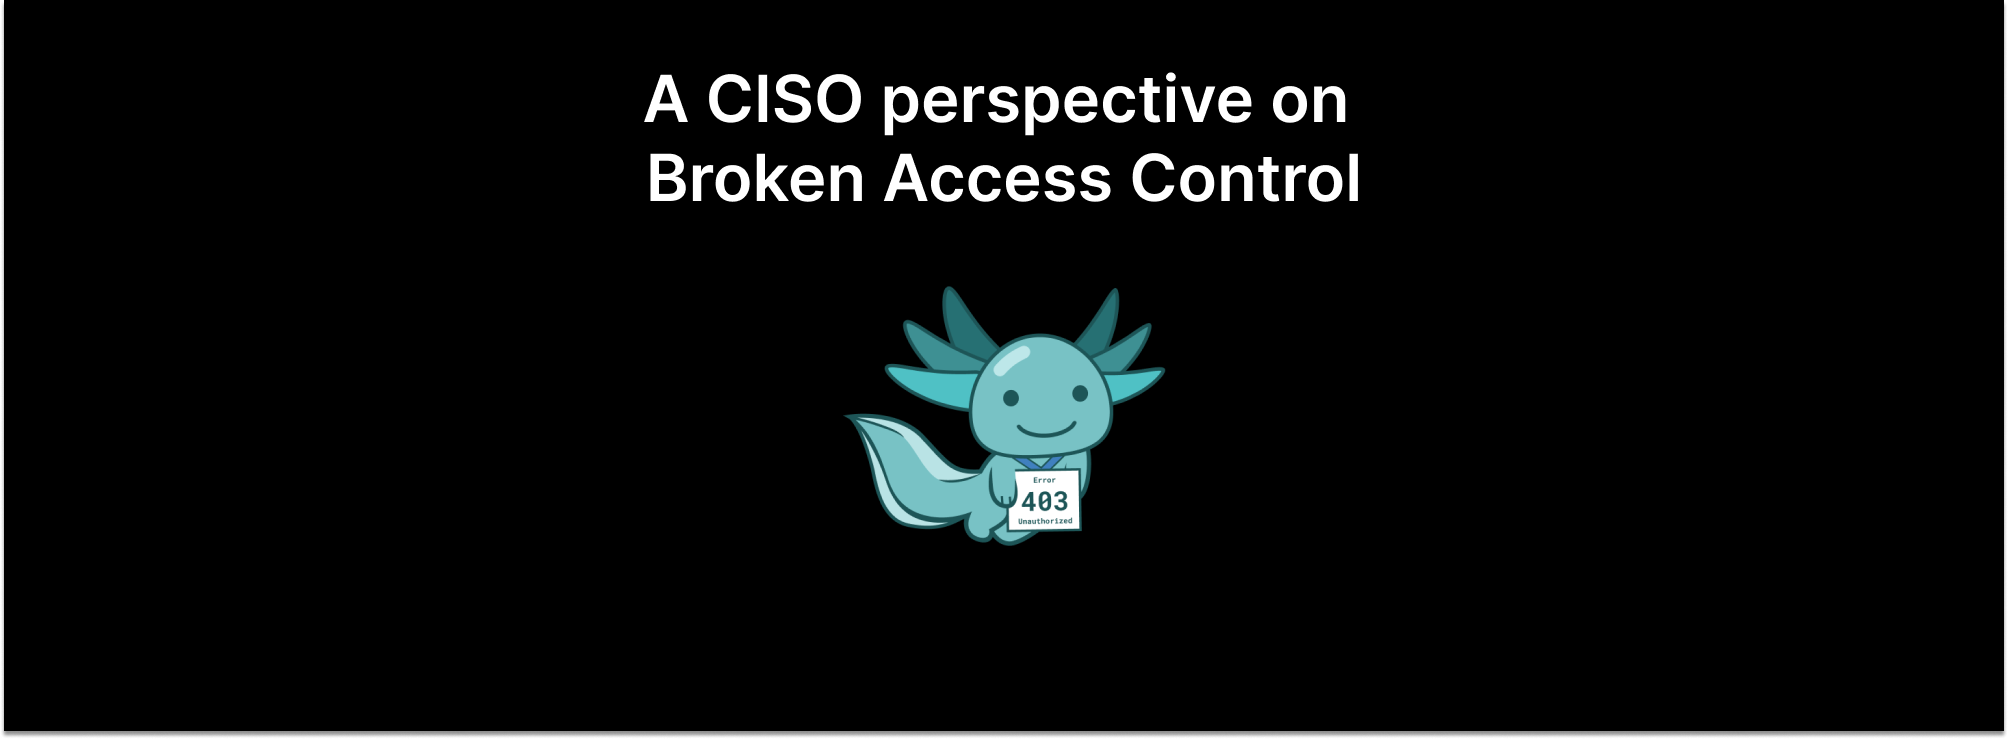 A CISO Perspective on Broken Access Control